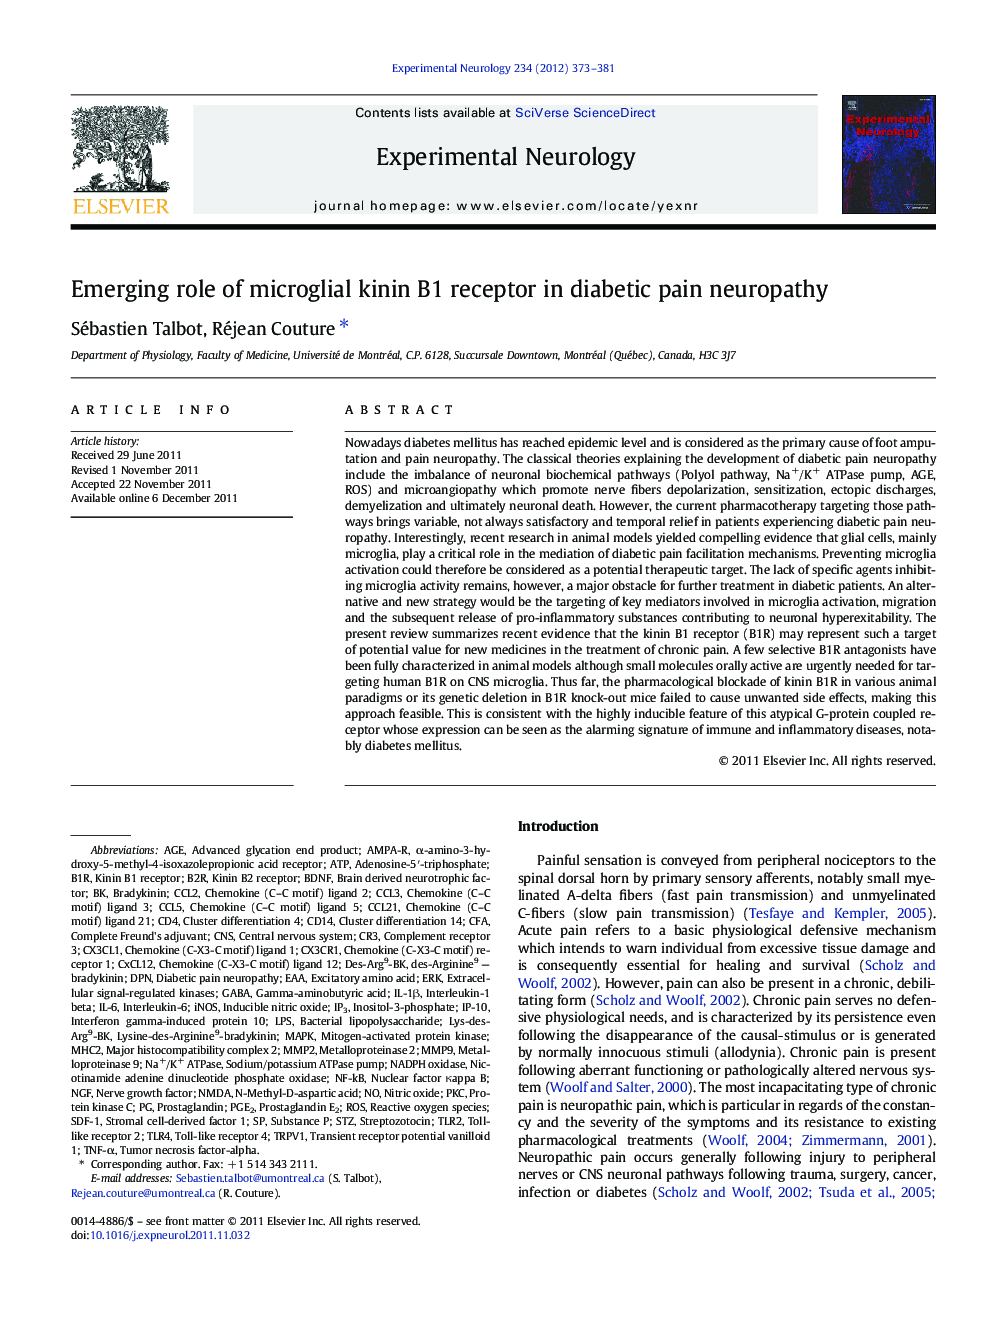 Emerging role of microglial kinin B1 receptor in diabetic pain neuropathy